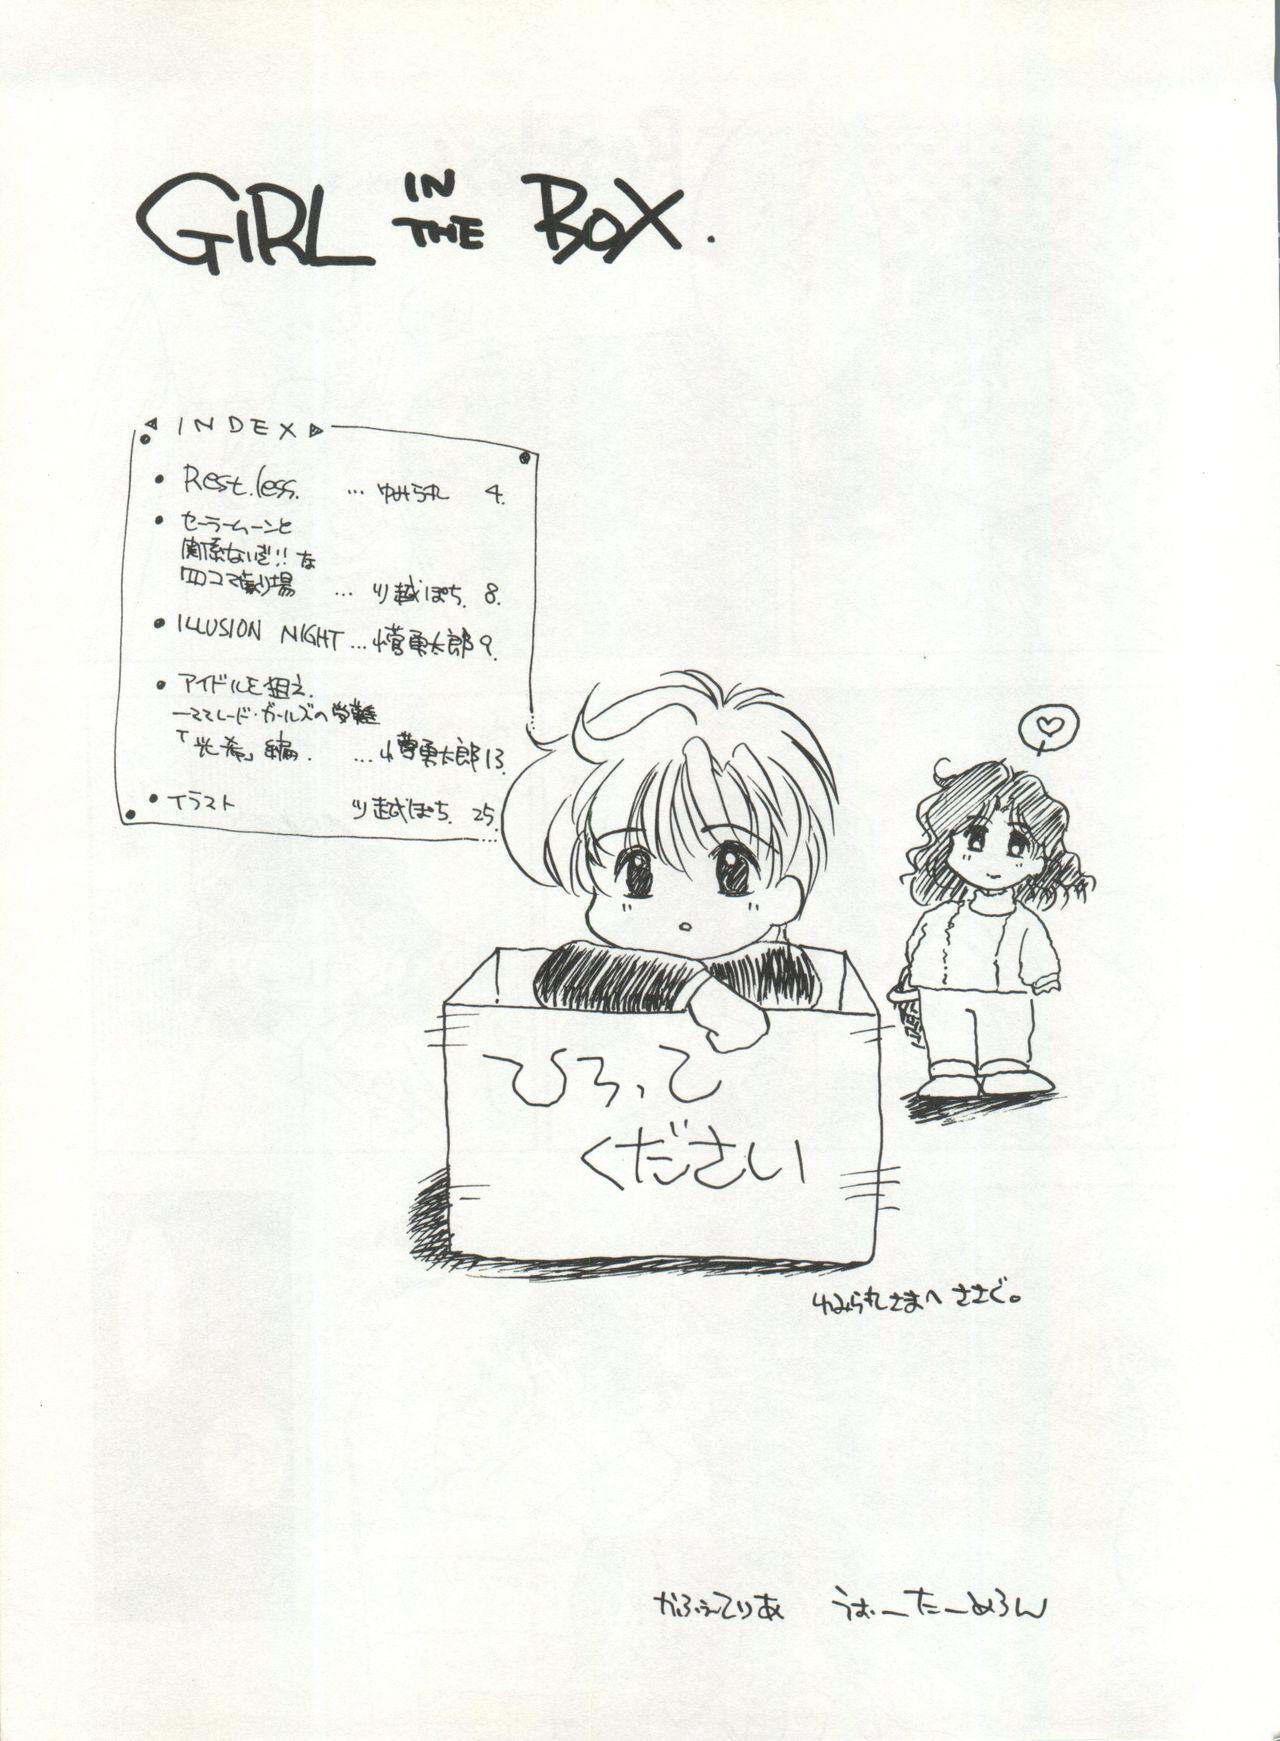 Daddy GIRL IN THE BOX - Marmalade boy Forbidden - Page 3